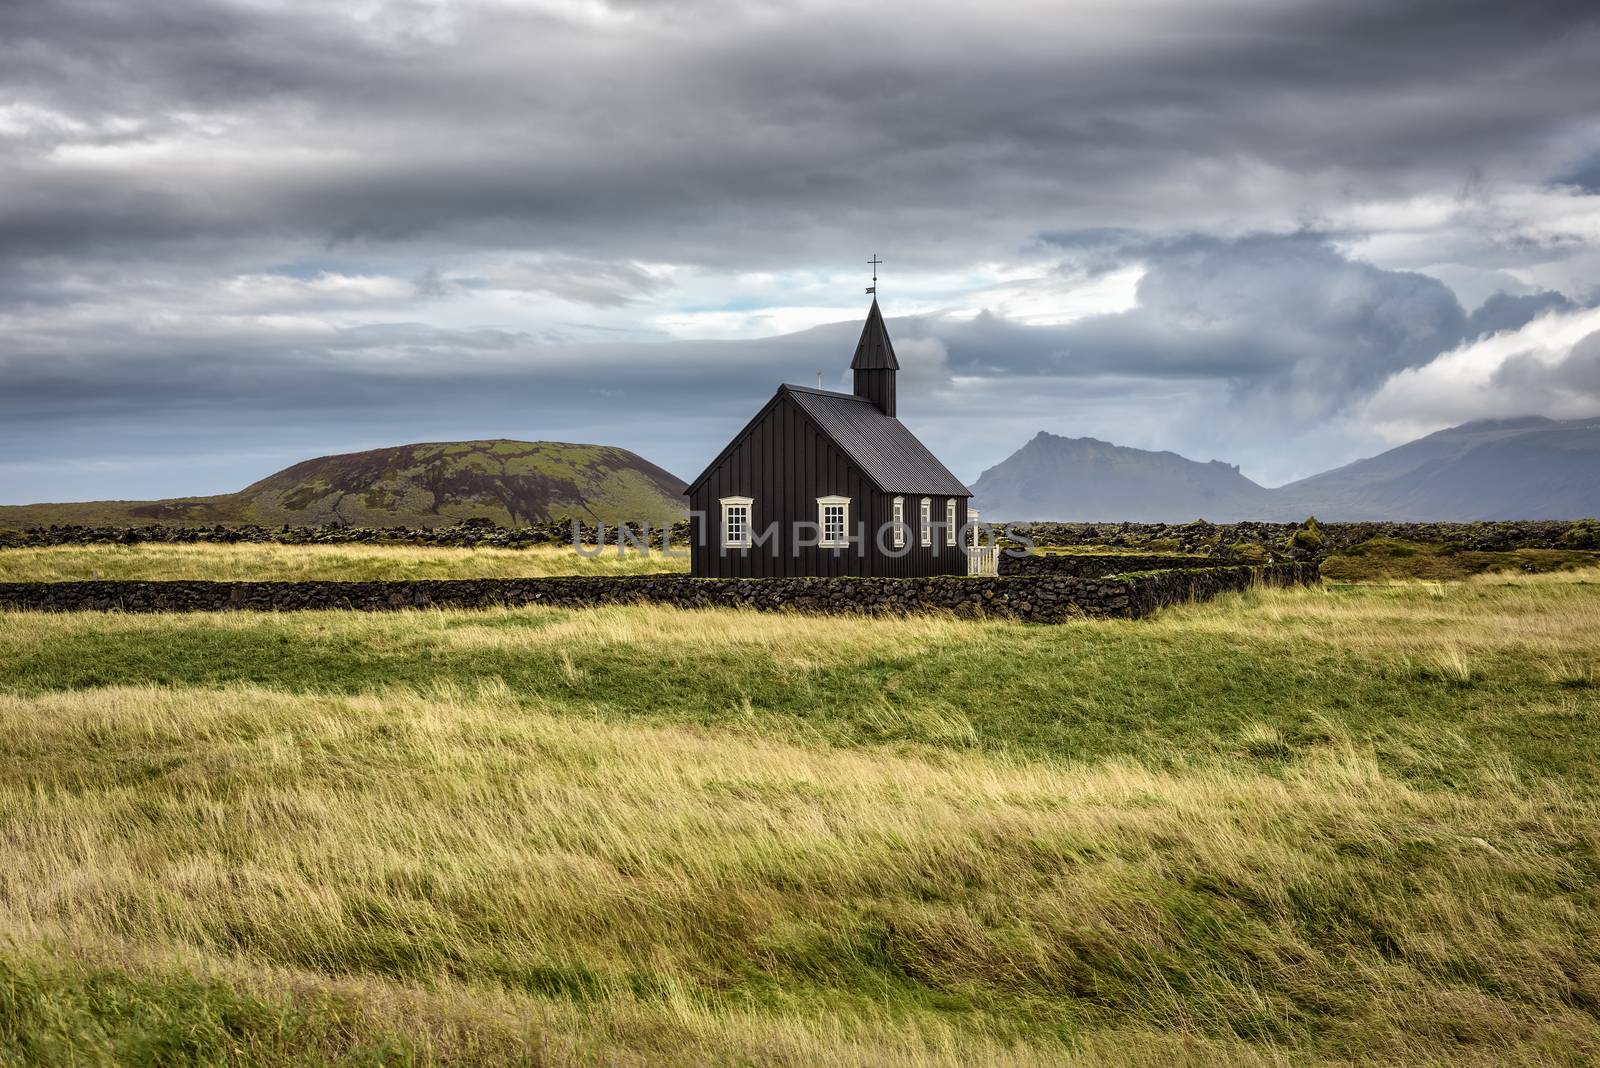 Black wooden church of Budir in Iceland by nickfox